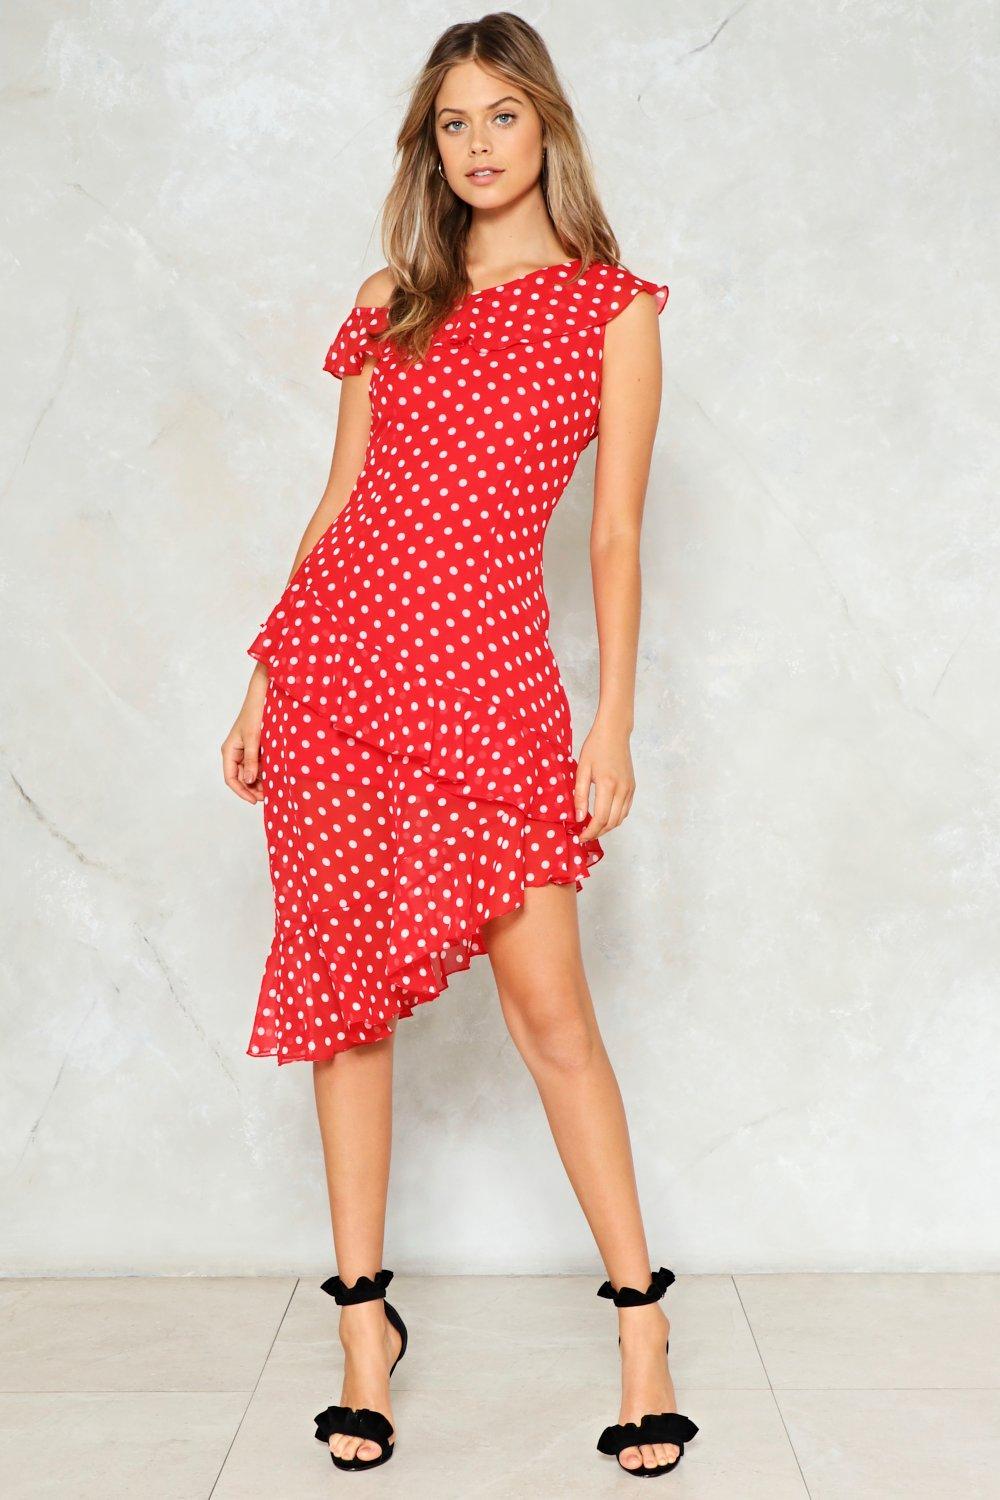 long red polka dot dress